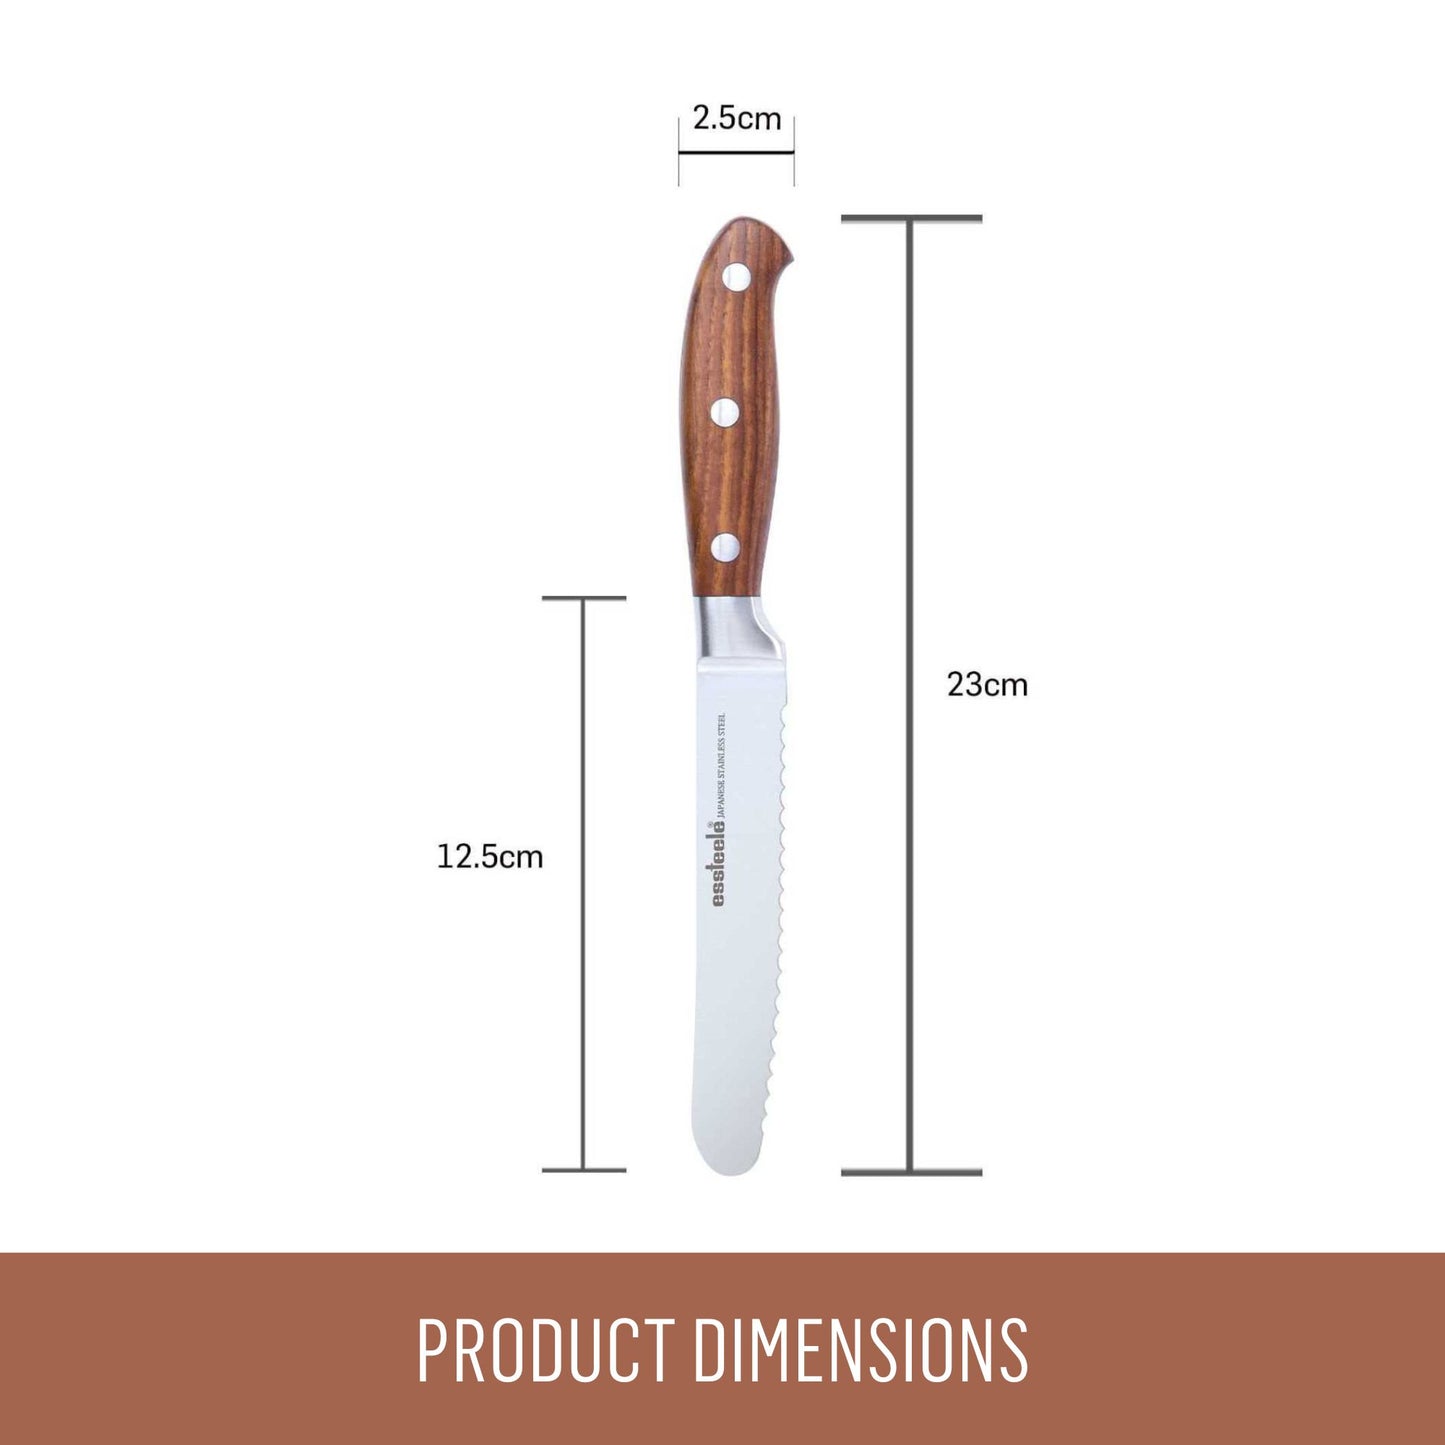 Essteele 12.5cm Serrated Utility Knife